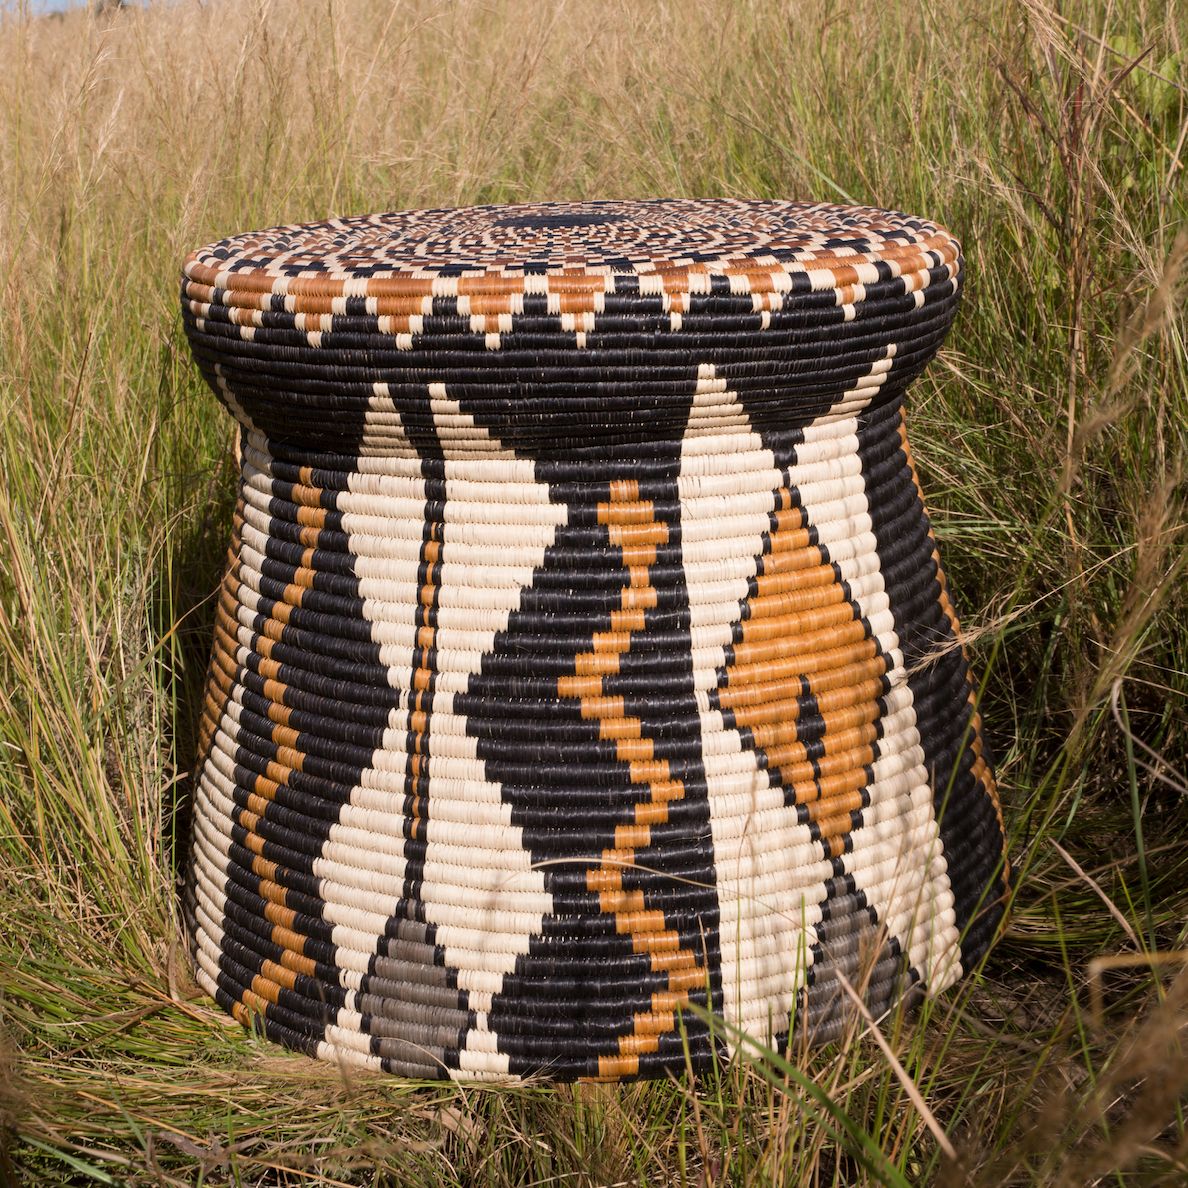 South Africa, Angeline Bonisiwe Masuku, Basket Weaving